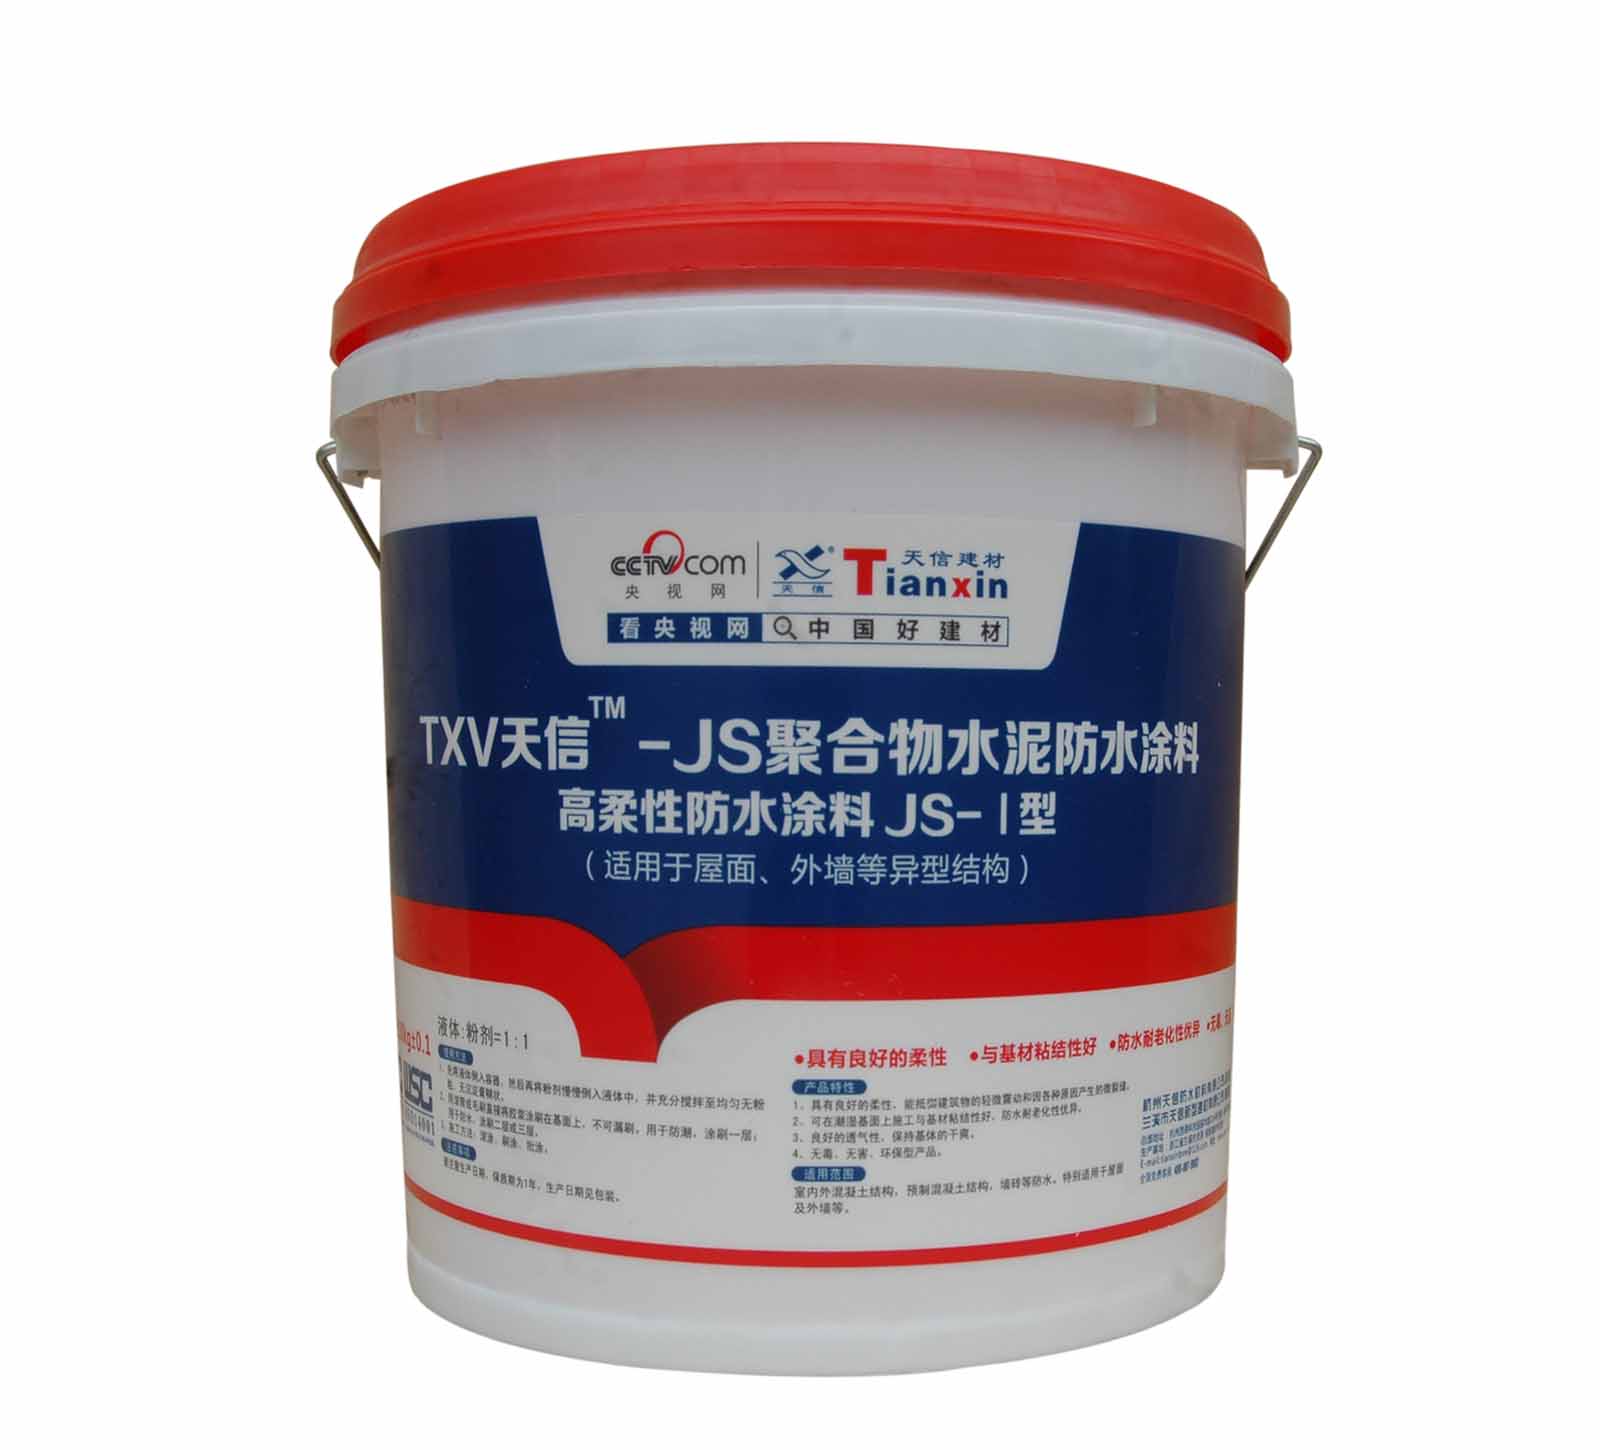 杭州市JS-III聚合物水泥防水涂料厂家天信JS-III聚合物水泥防水涂料